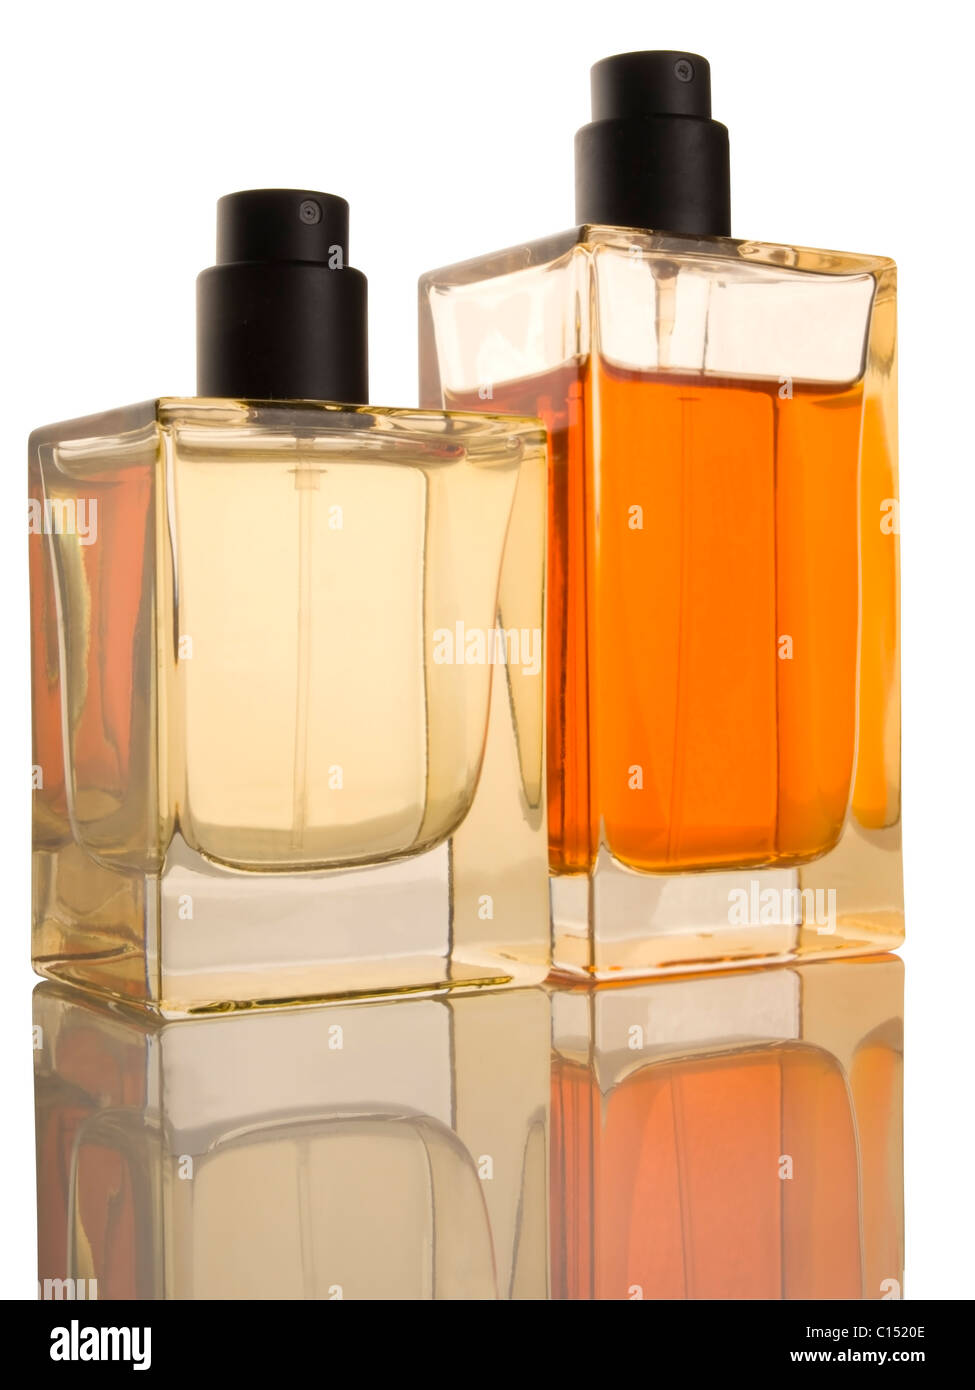 Dos perfumes botles Fotografía de stock - Alamy